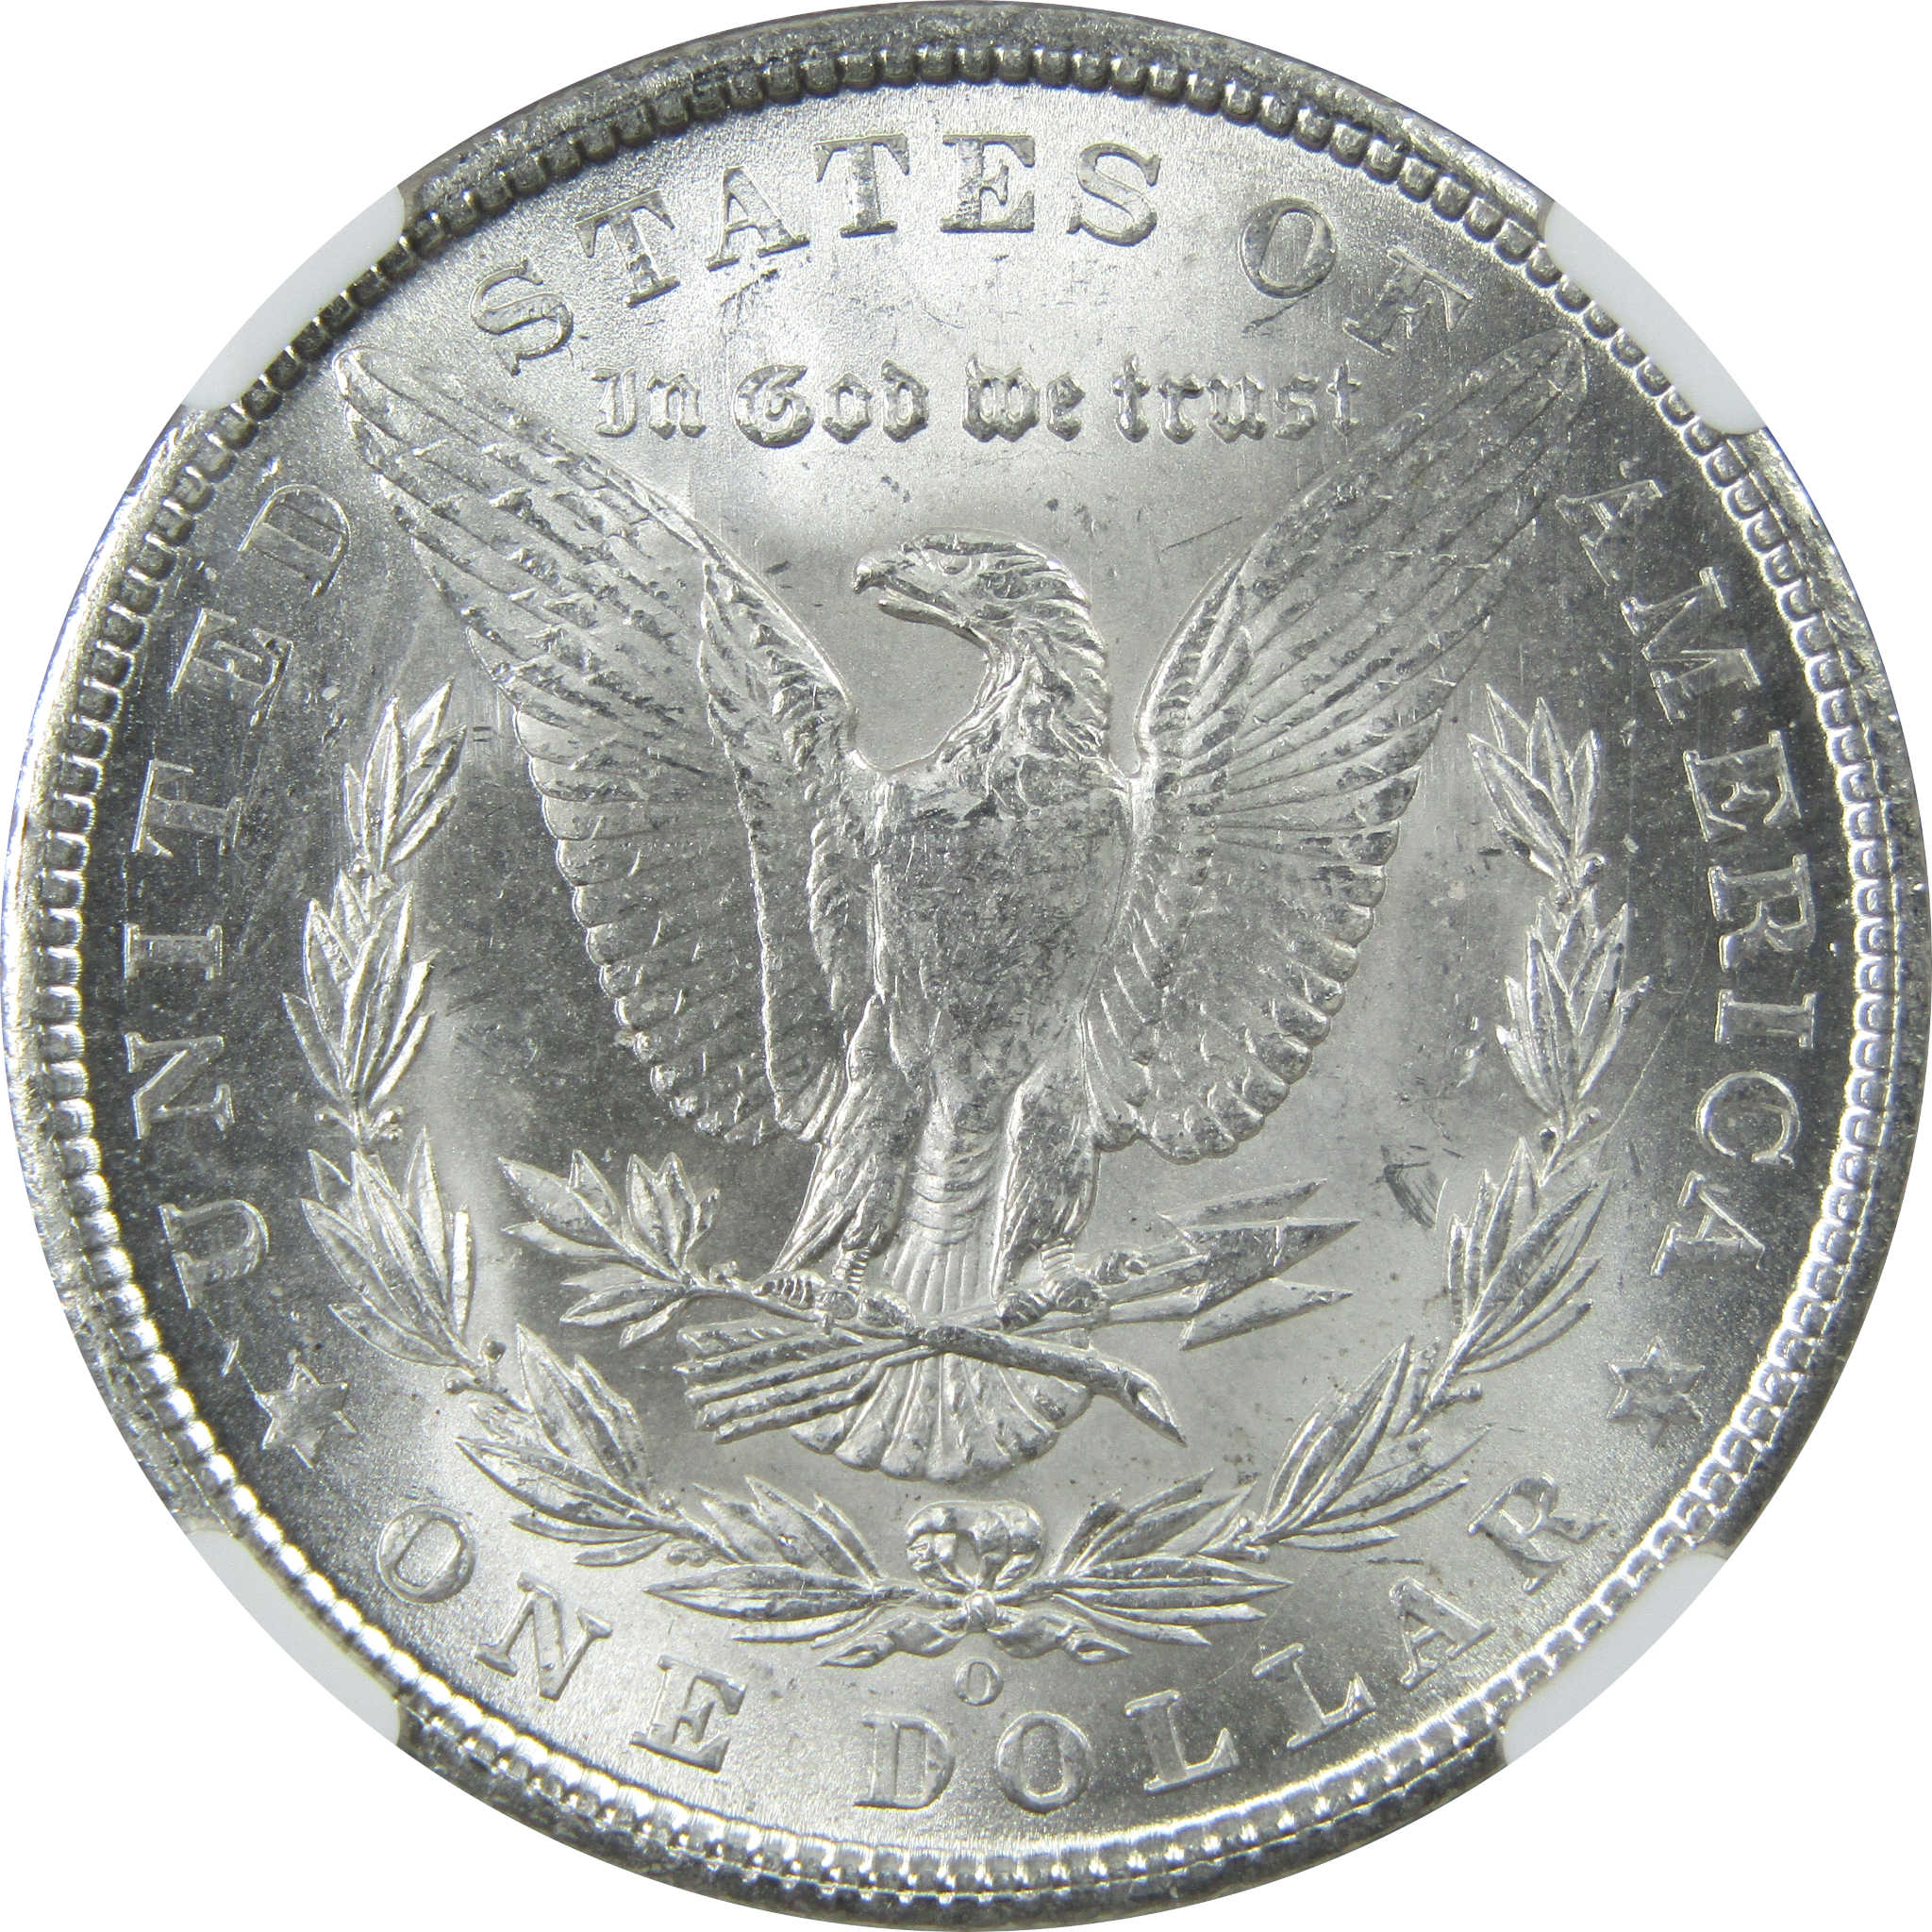 1902 O Morgan Dollar MS 63 NGC Silver $1 Uncirculated Coin SKU:I13773 - Morgan coin - Morgan silver dollar - Morgan silver dollar for sale - Profile Coins &amp; Collectibles